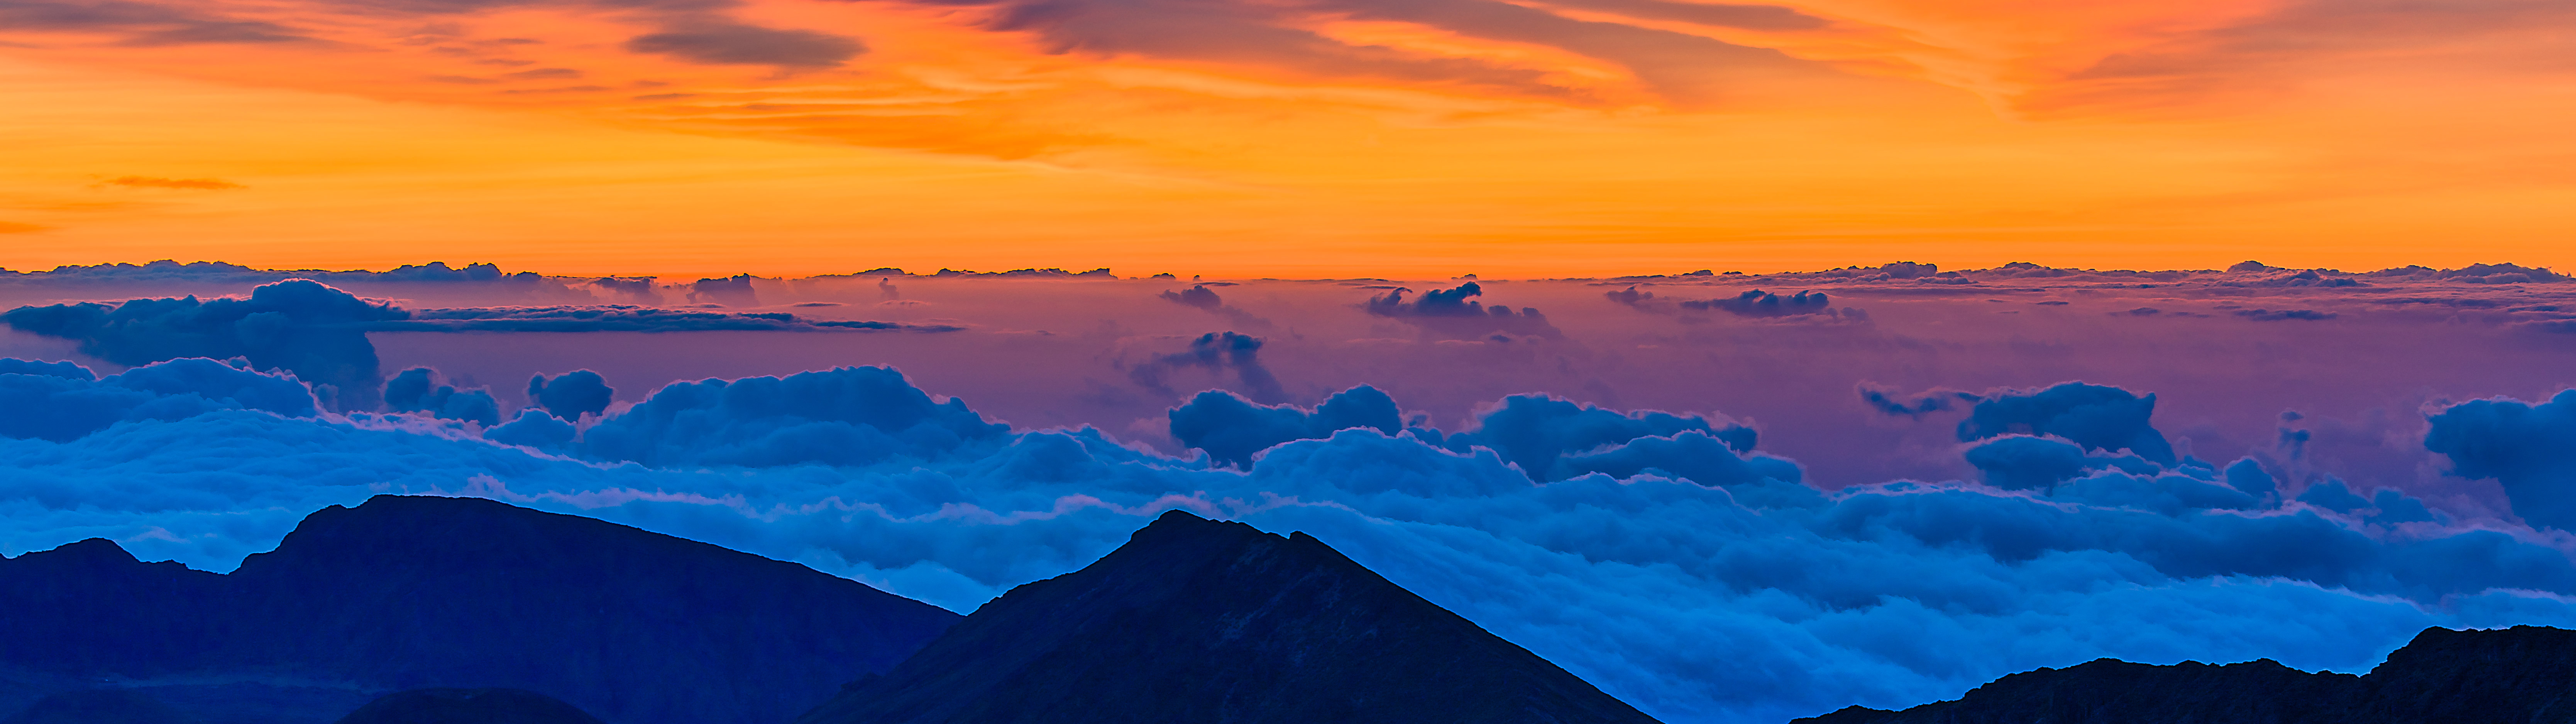 General 6674x1877 Hawaii dawn landscape mountains clouds sky sunrise orange blue purple dual monitors multiple display